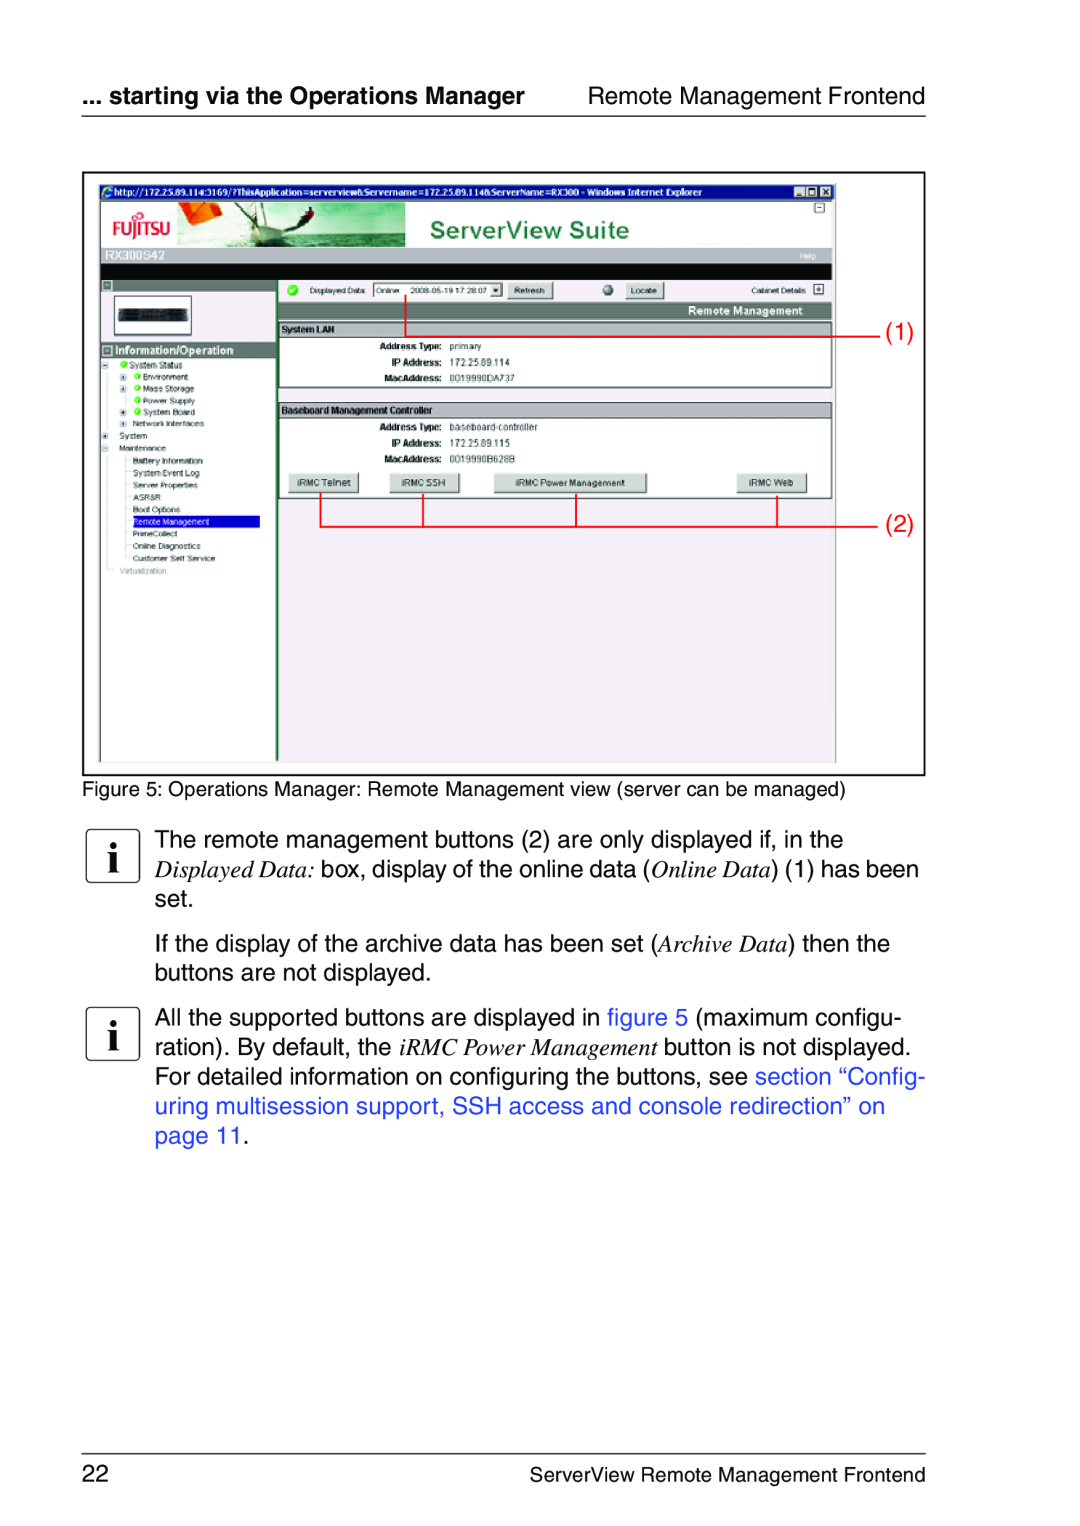 Fujitsu V4.90 manual starting via the Operations Manager 